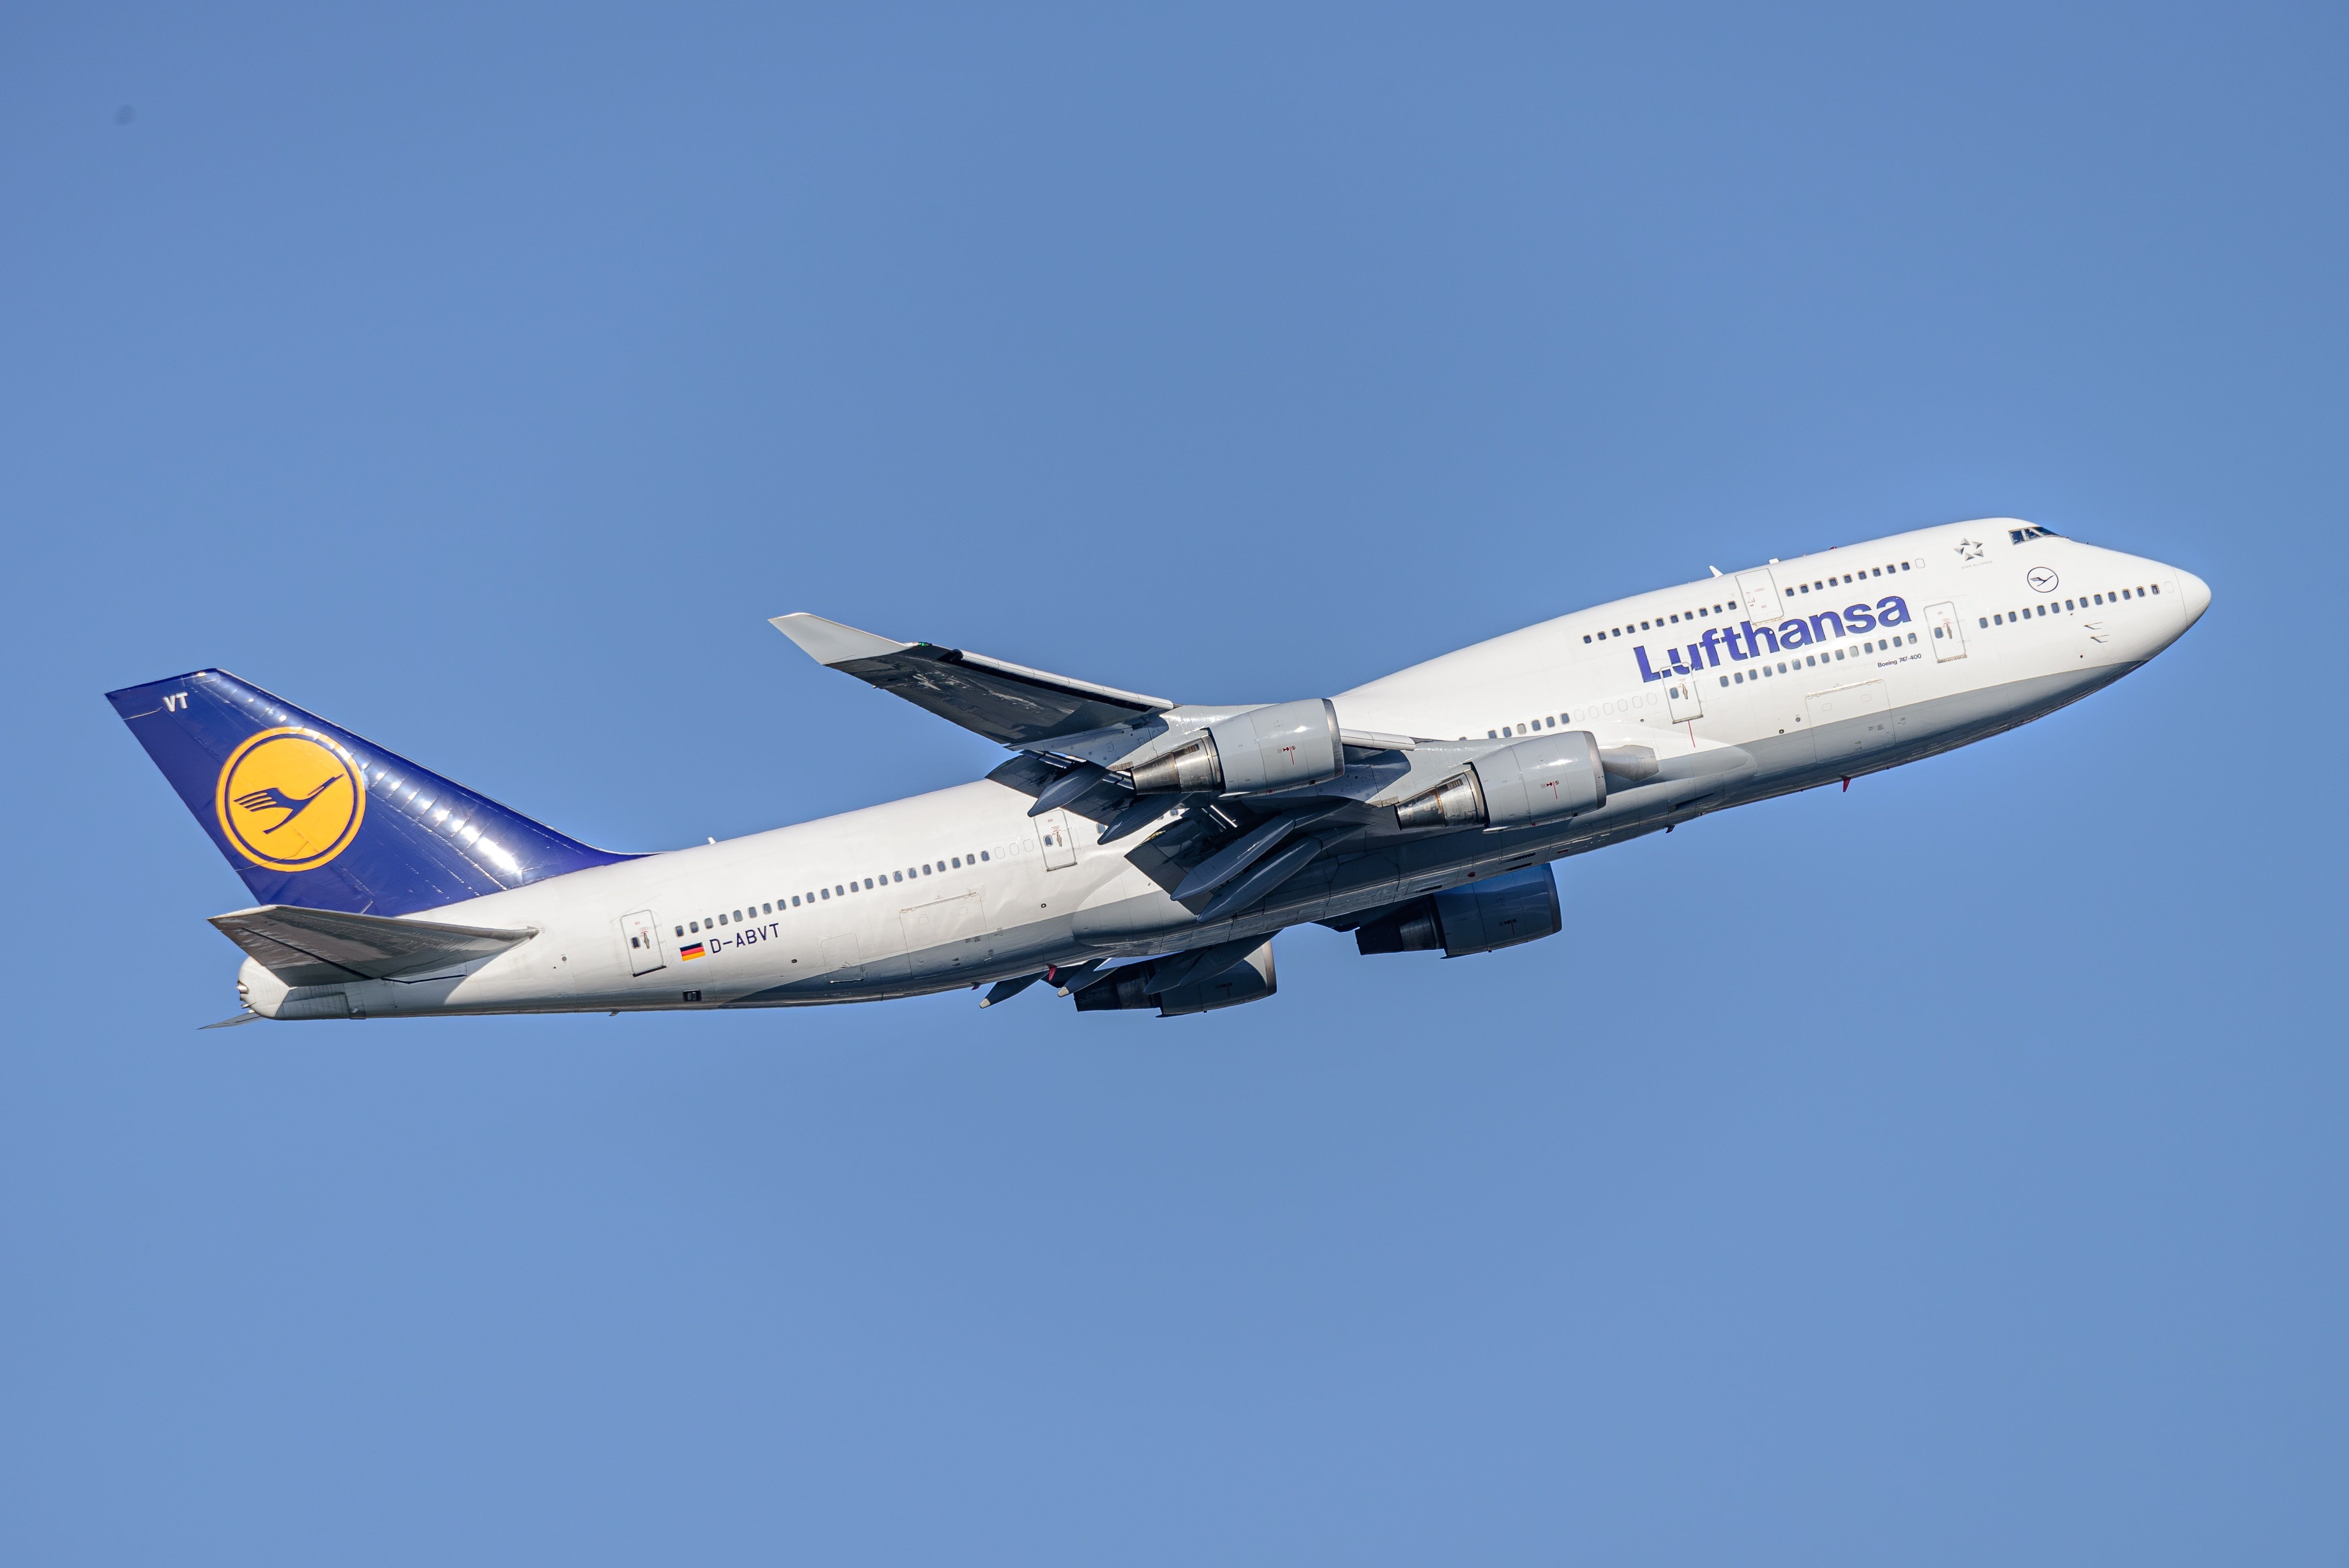 Lufthansa 747-400 taking off